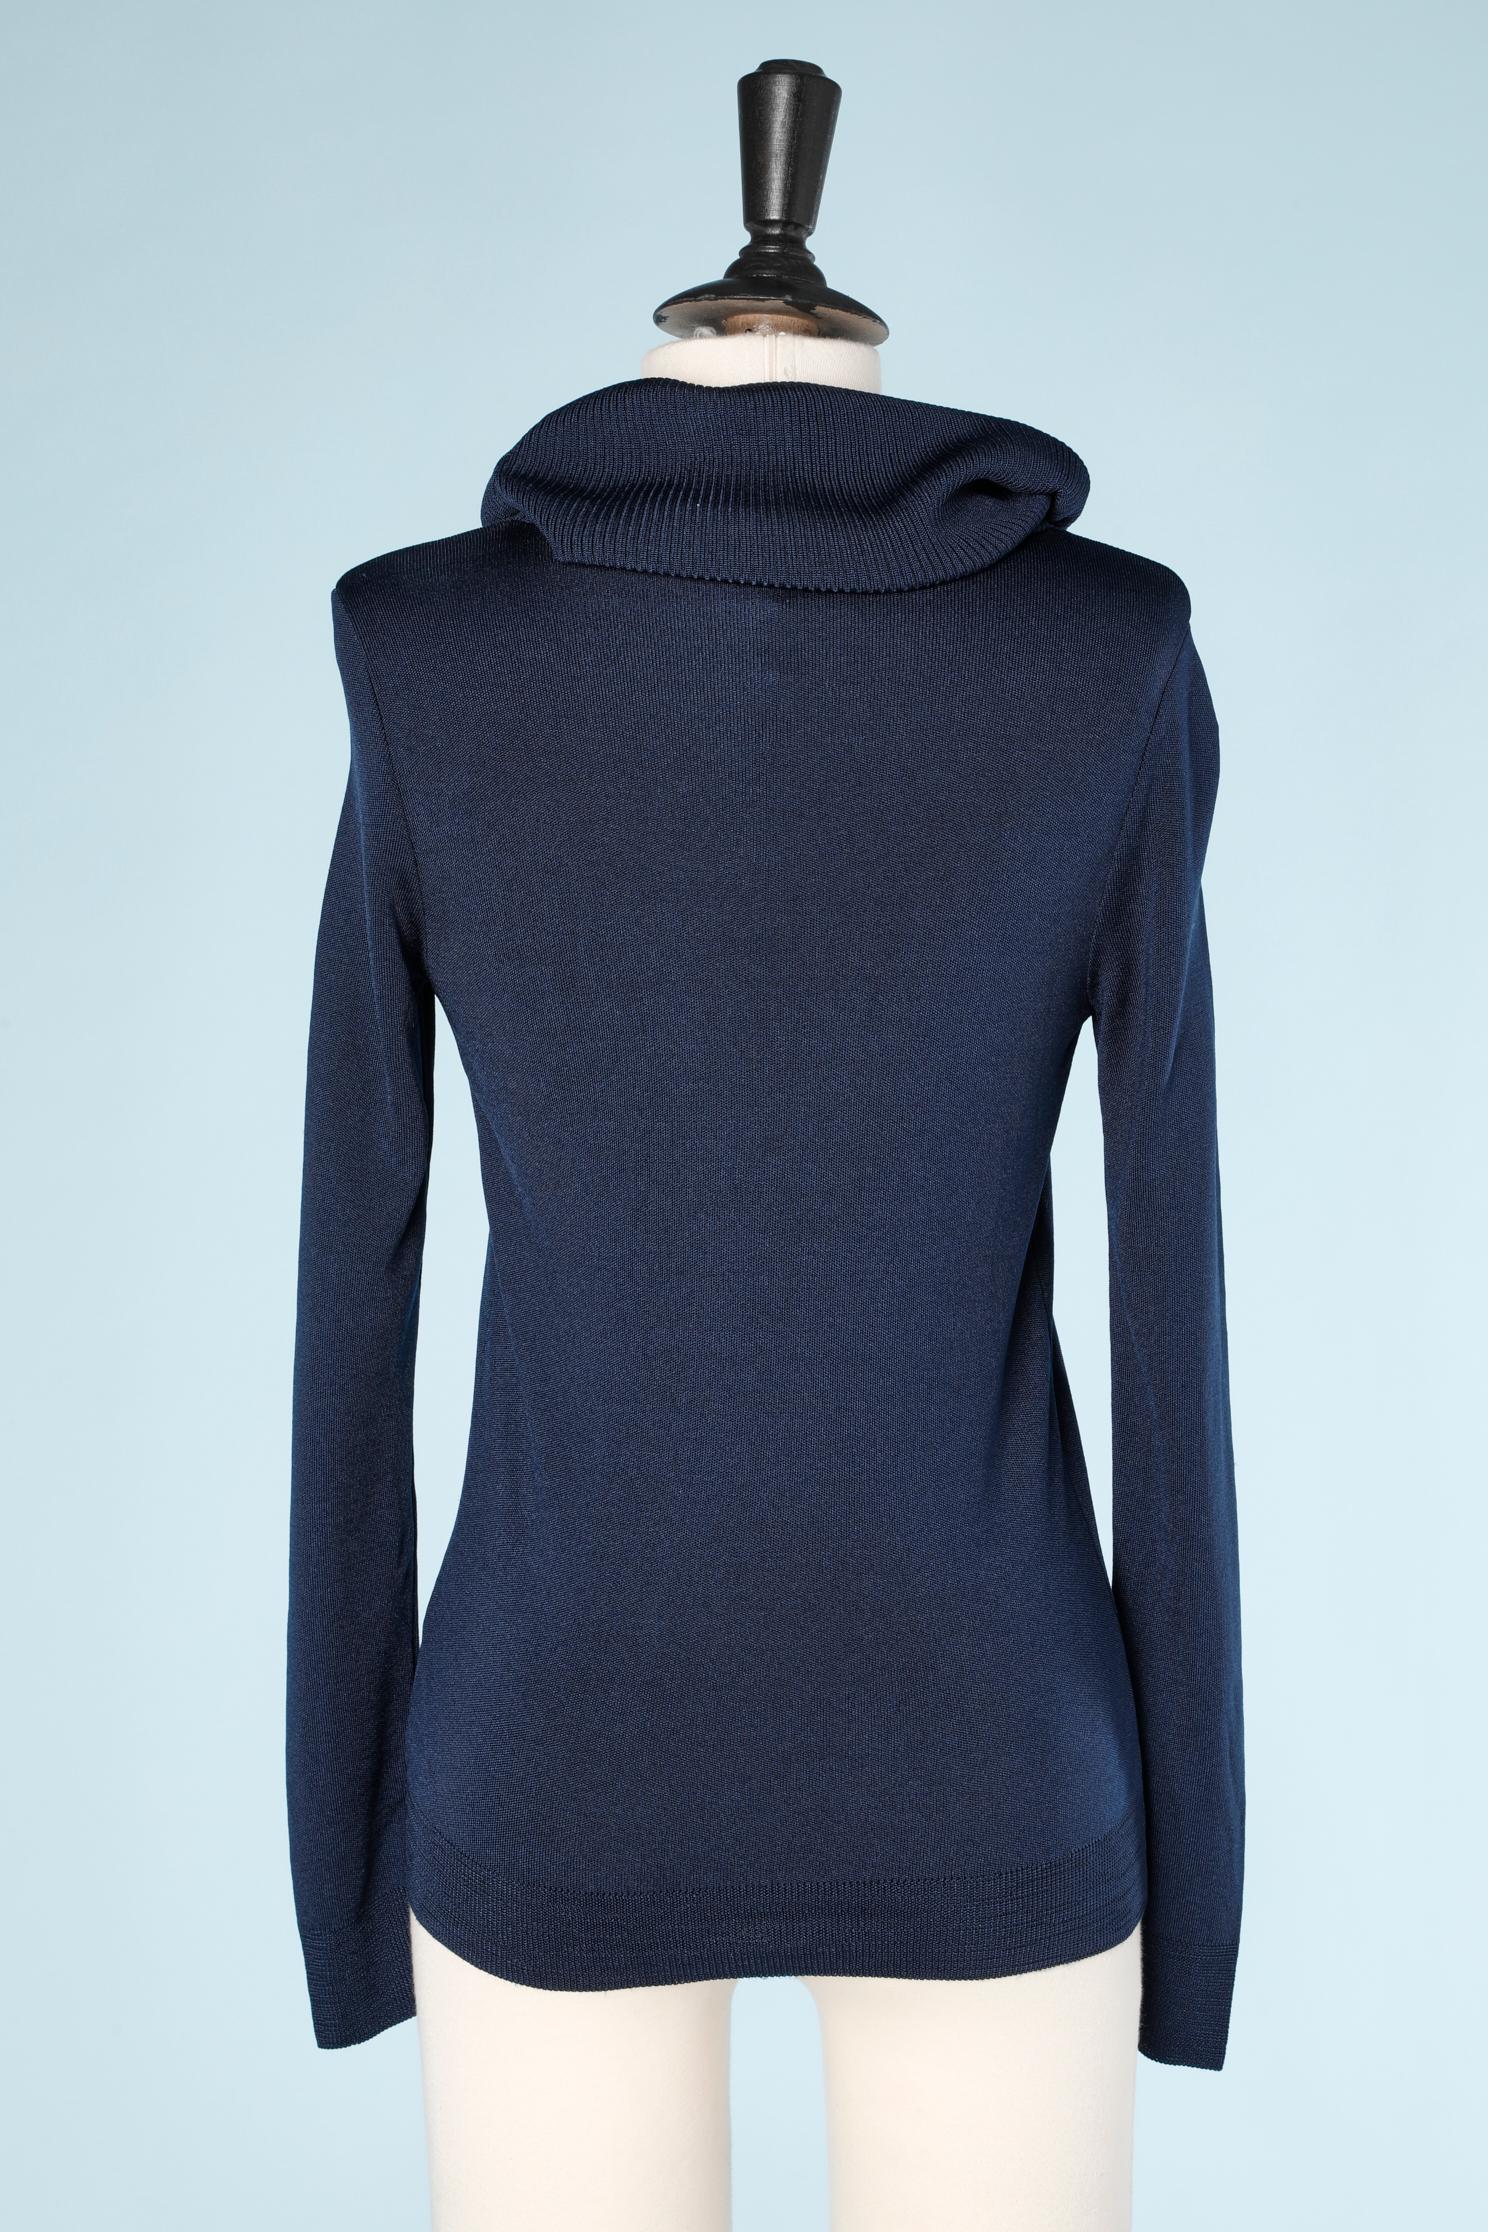 Women's Navy blue turtle neck sweater Pierre Cardin Circa 1970's  For Sale